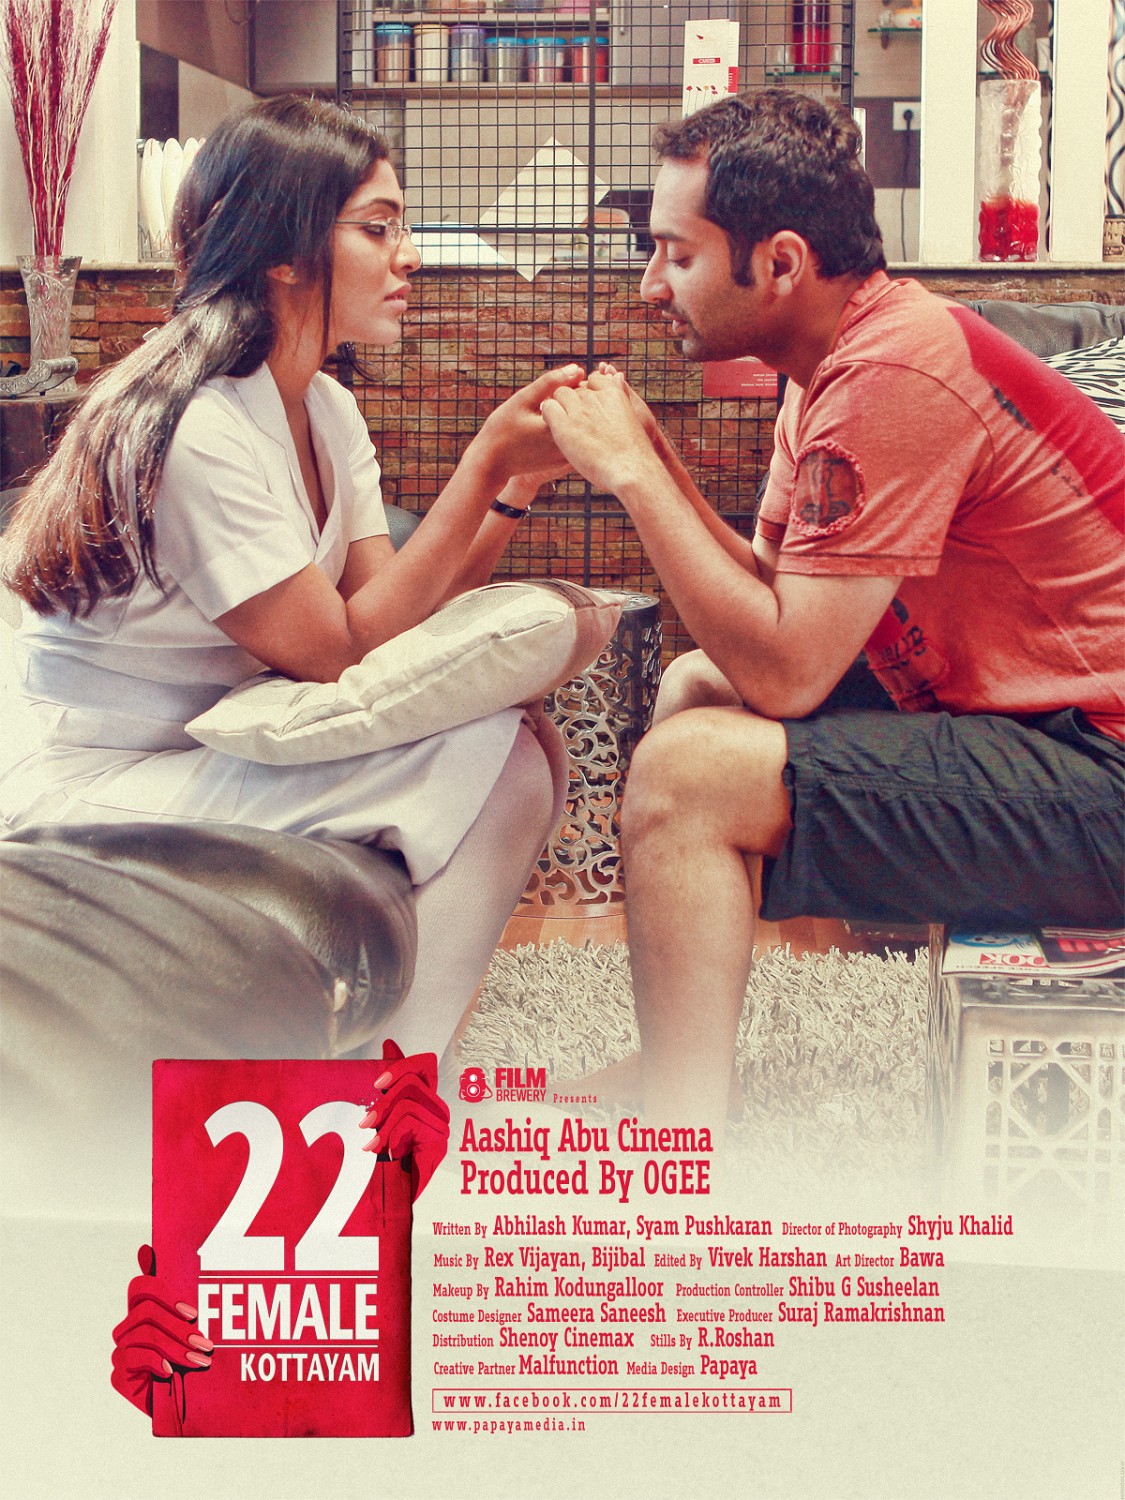 Extra Large Movie Poster Image for 22 Female Kottayam (#4 of 28)